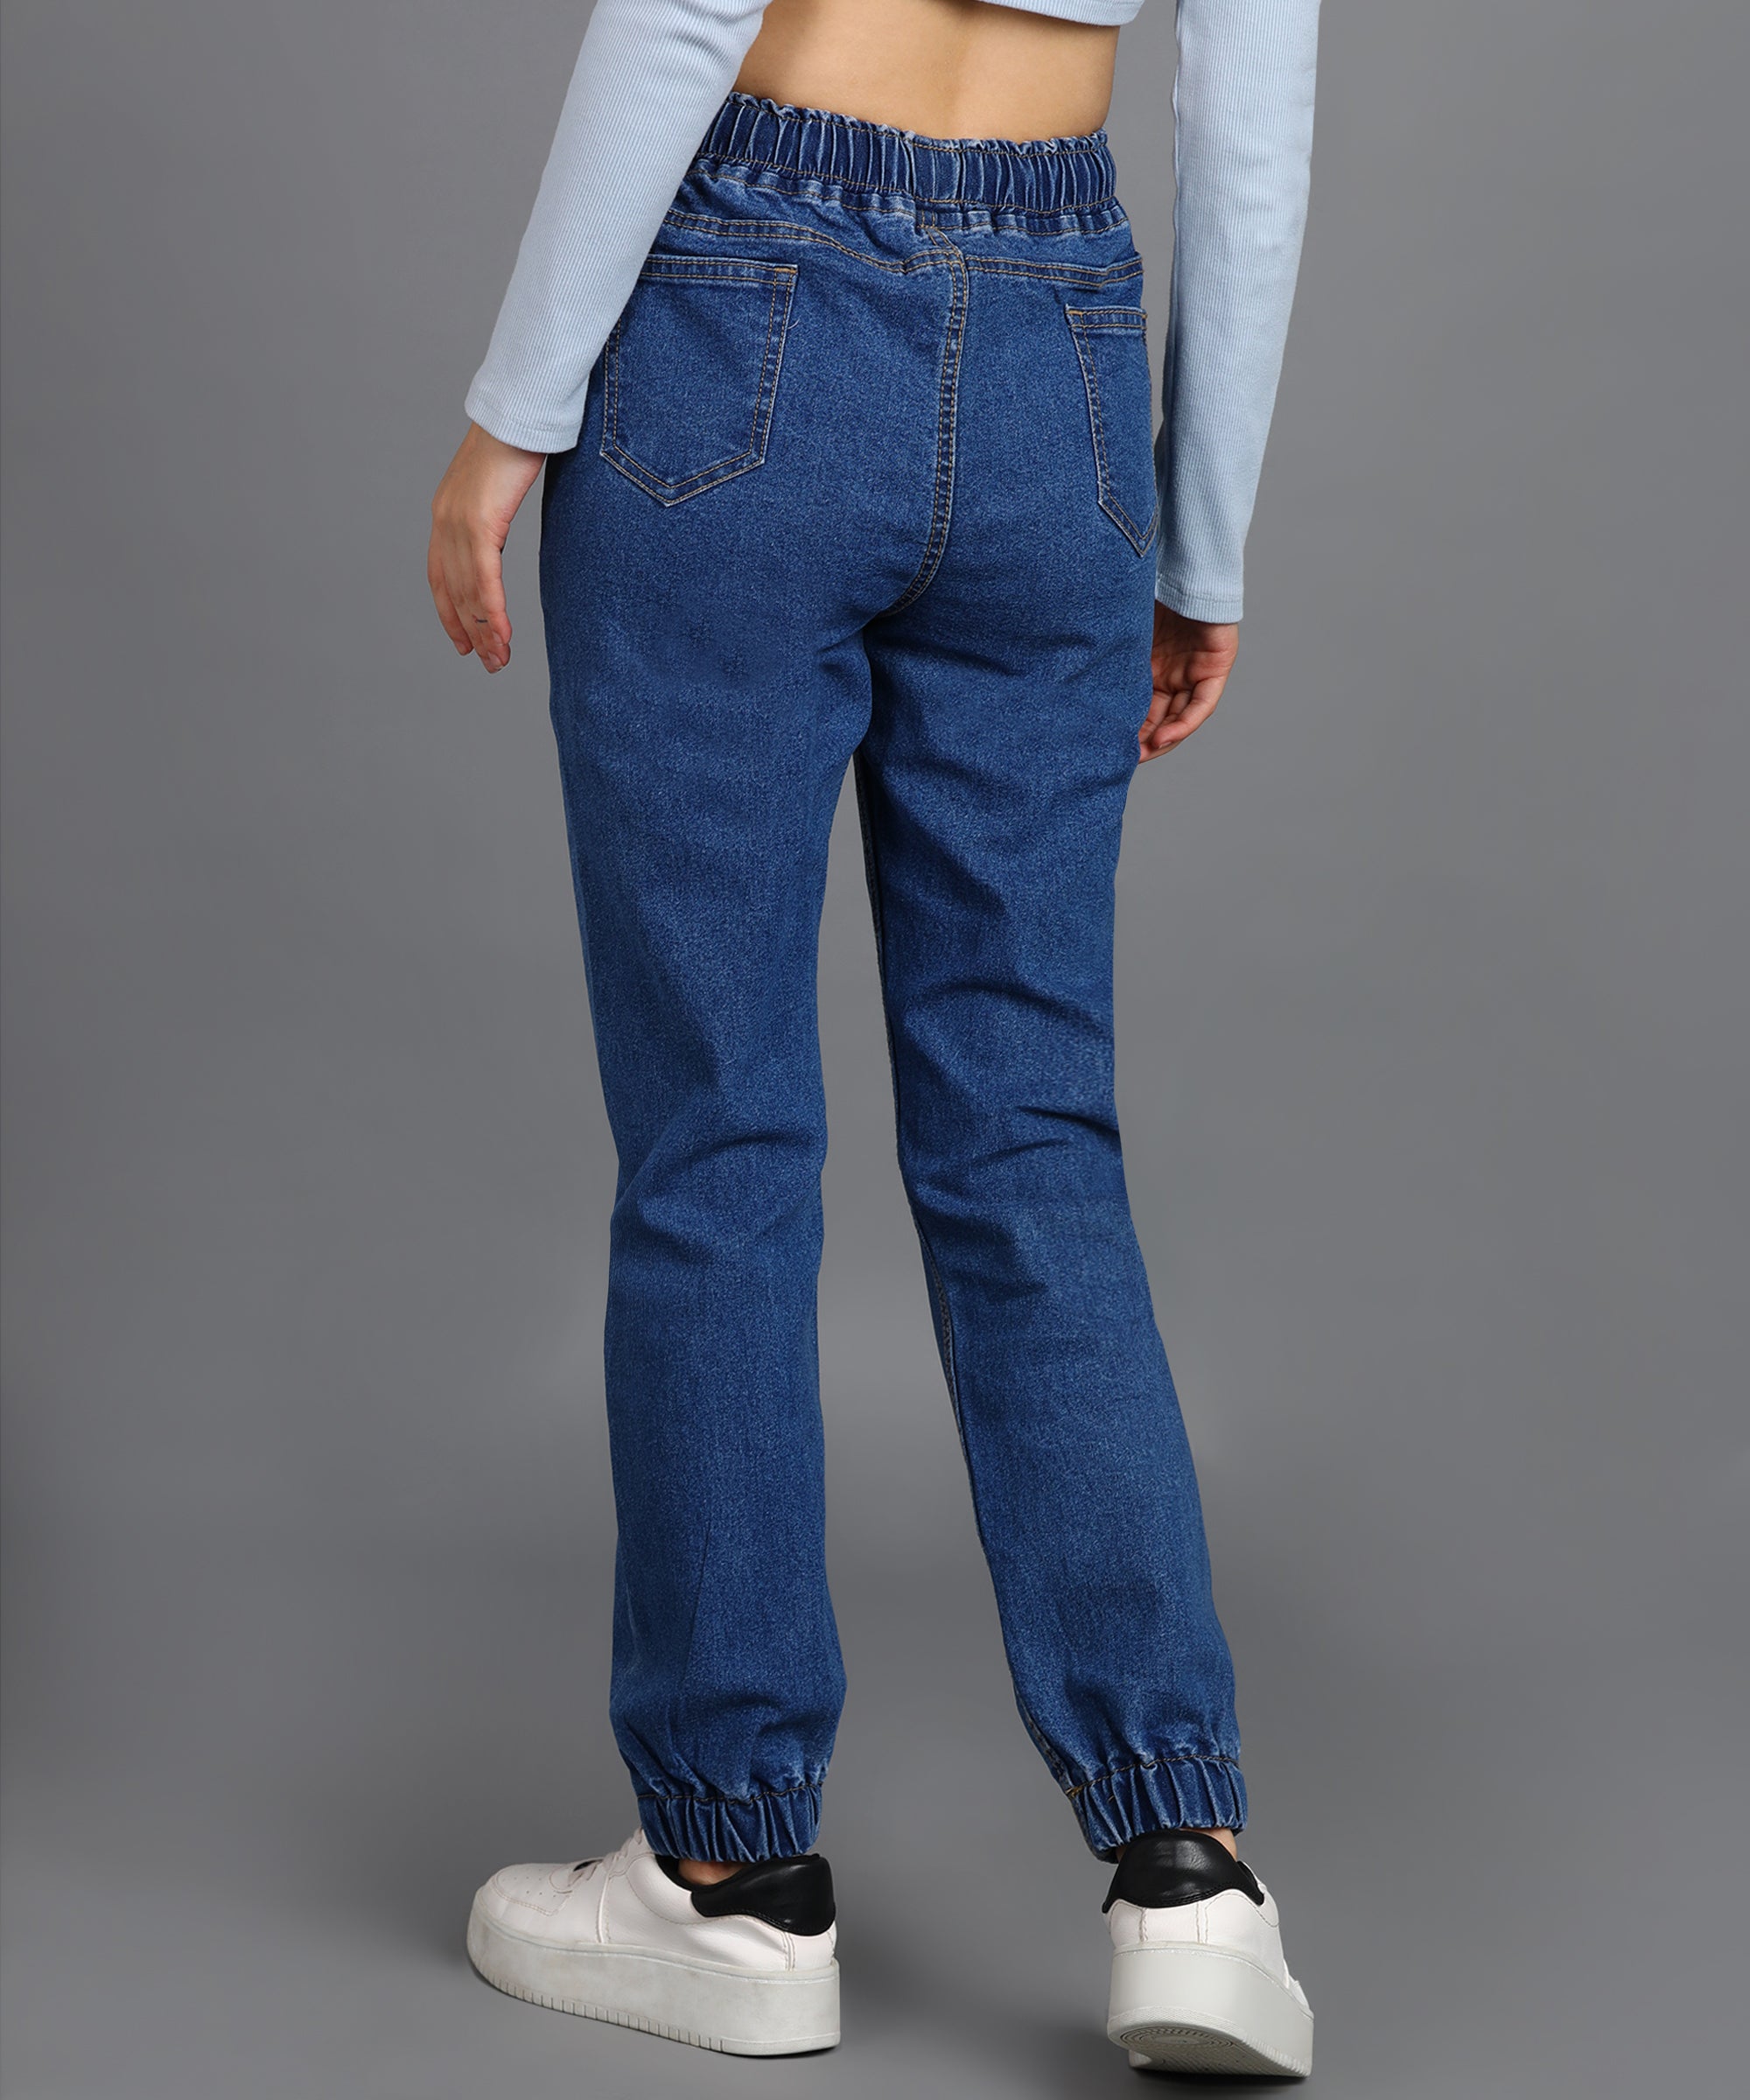 Urbano Fashion Women's Light Blue Regular Fit Washed Jogger Jeans